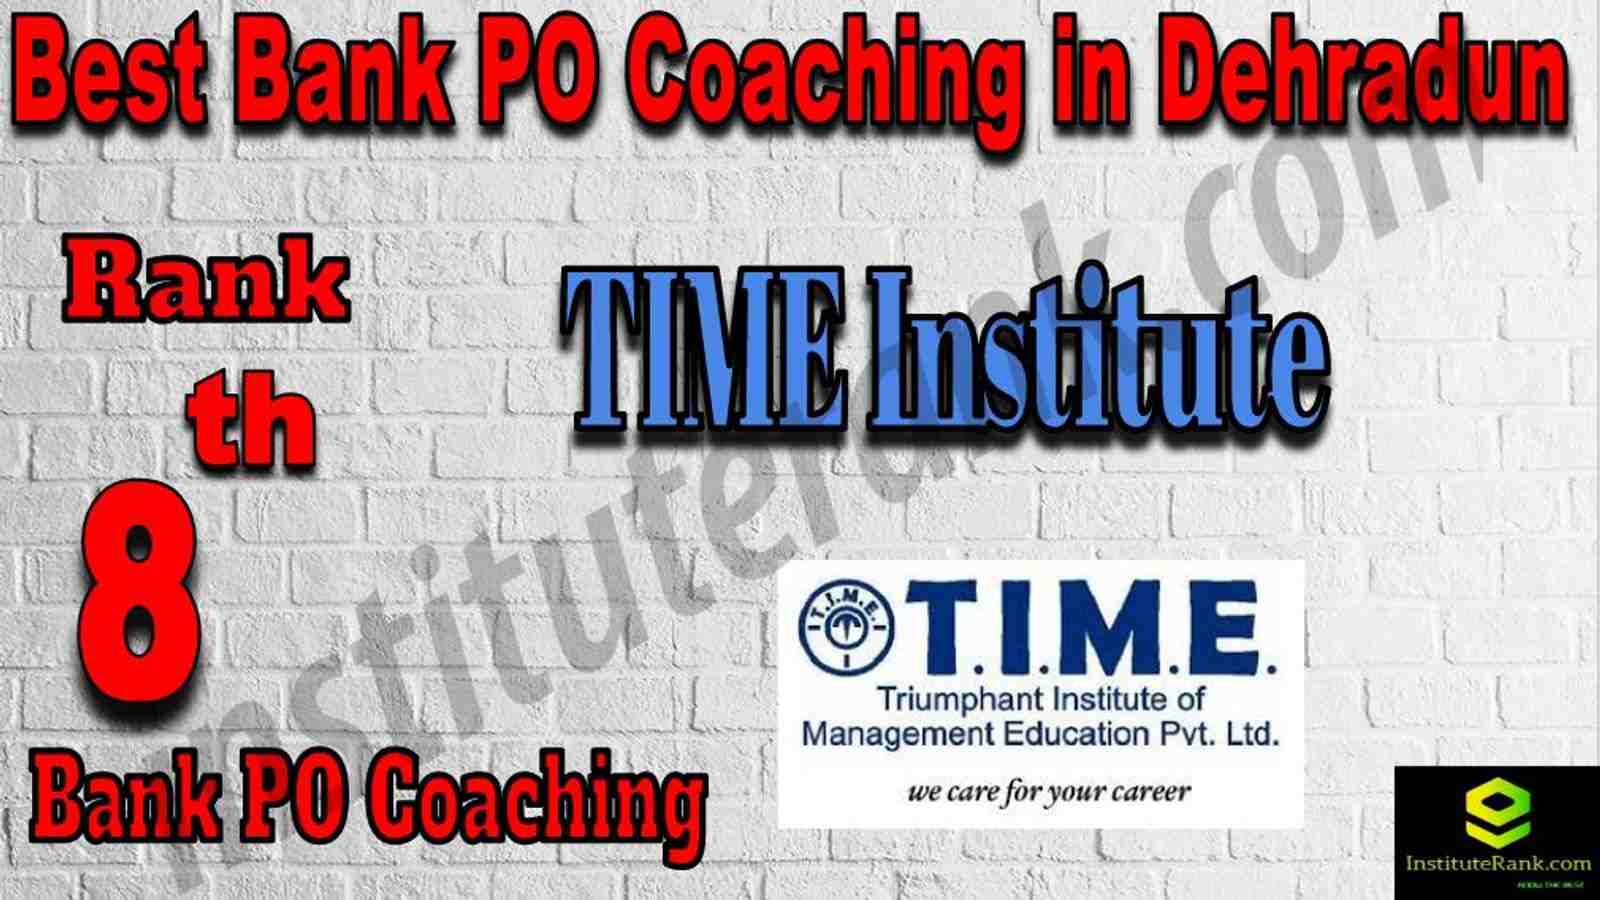 8th Best Bank PO Coaching in Dehradun